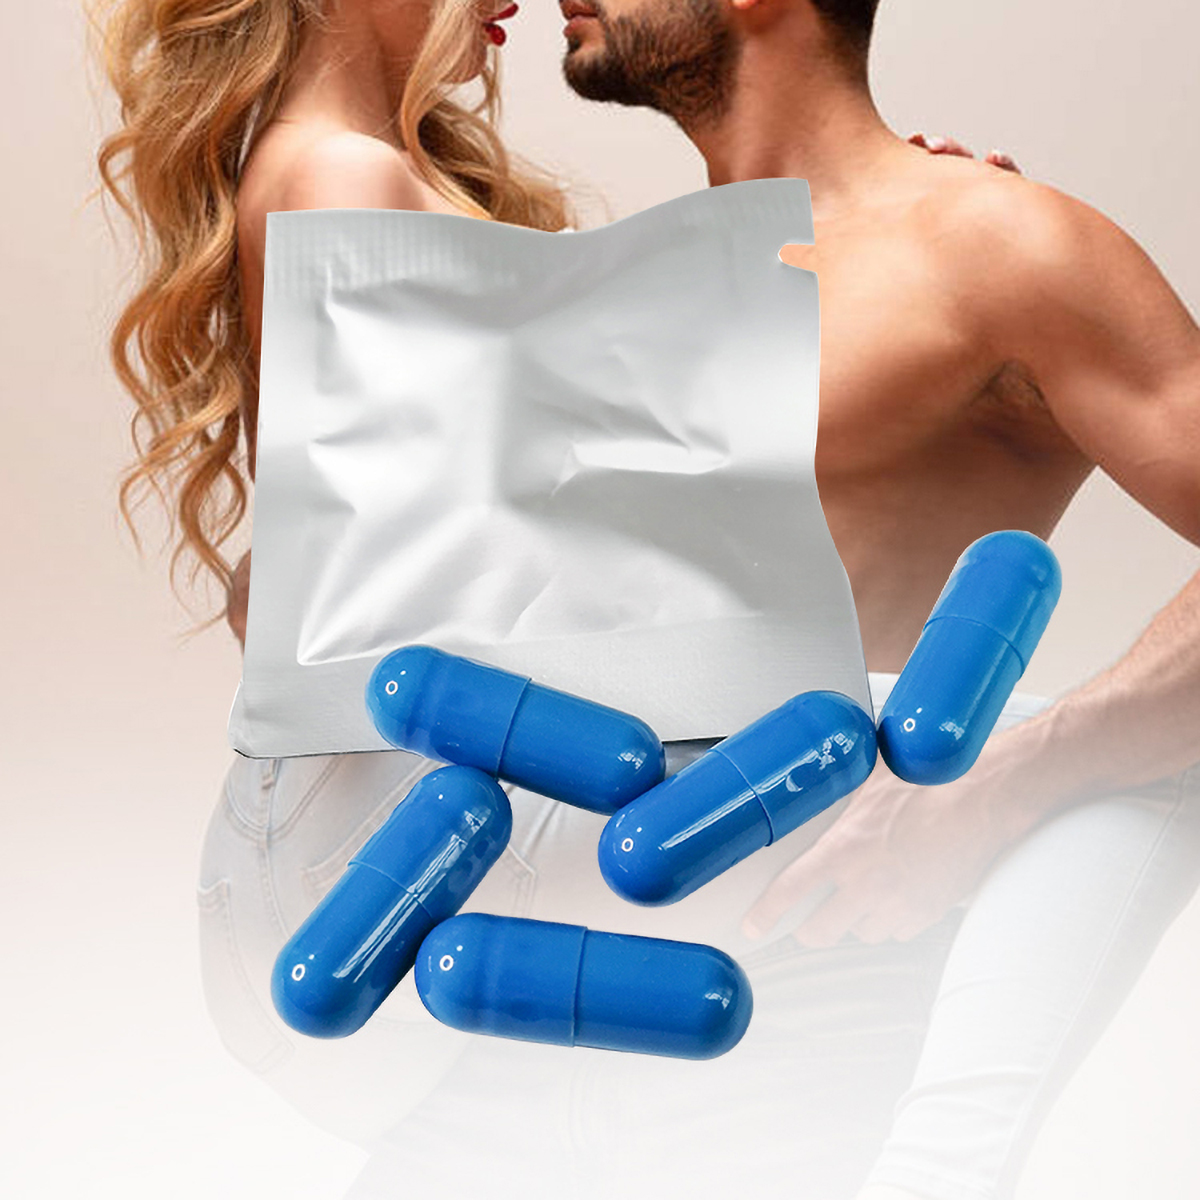 00# tablete aluminijske vrećice za muško zdravlje Snažne tablete za erektilnu disfukciju i mušku impotenciju